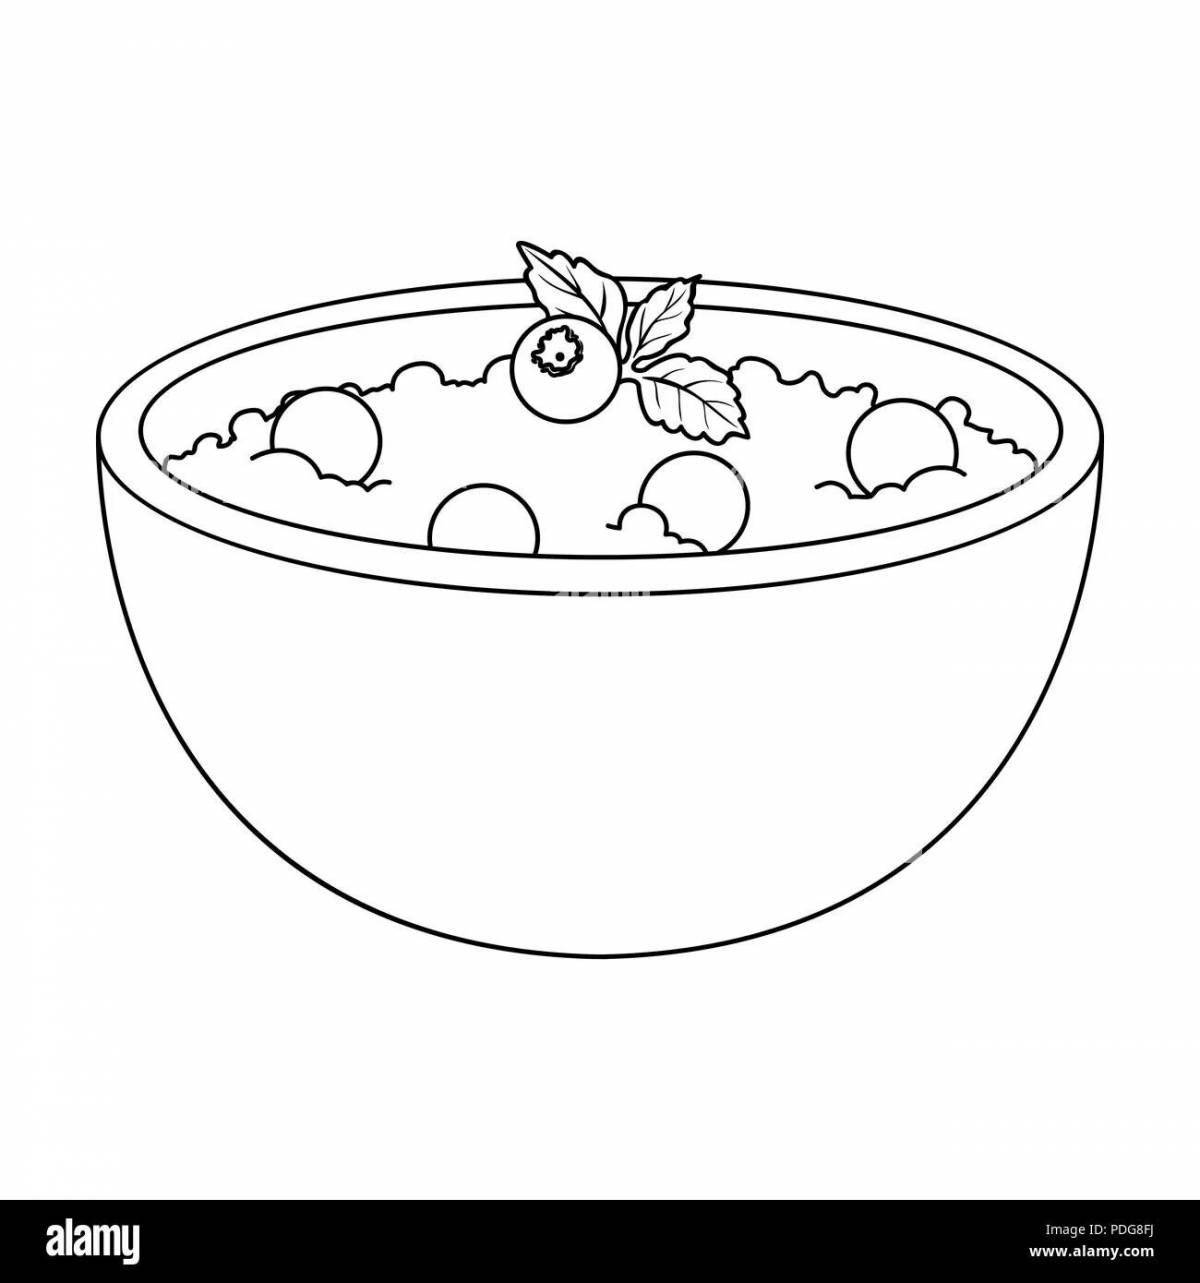 Cute porridge coloring page